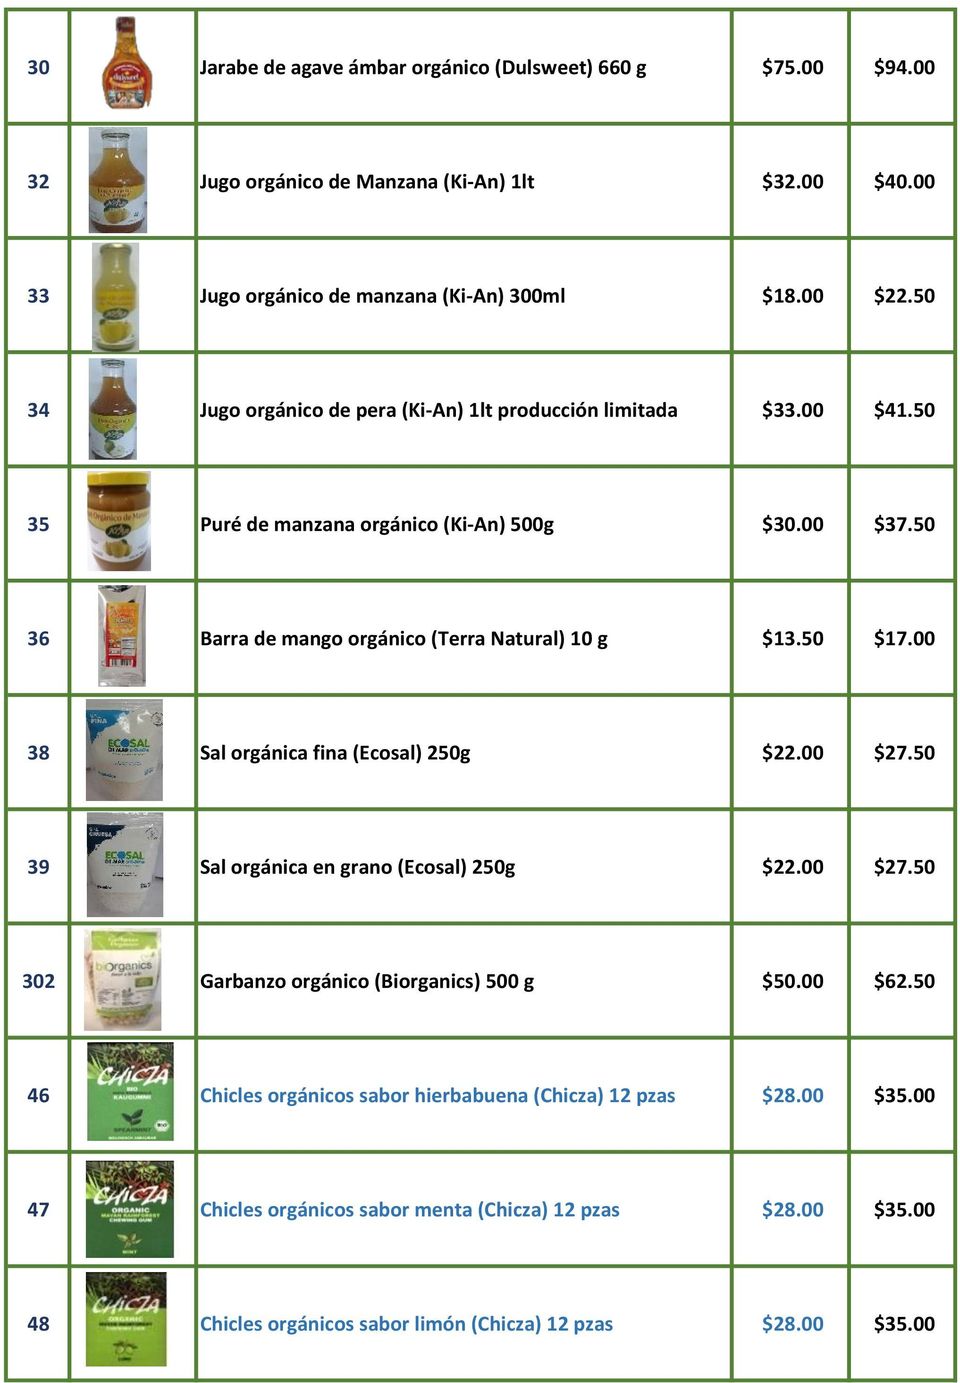 50 36 Barra de mango orgánico (Terra Natural) 10 g $13.50 $17.00 38 Sal orgánica fina (Ecosal) 250g $22.00 $27.50 39 Sal orgánica en grano (Ecosal) 250g $22.00 $27.50 302 Garbanzo orgánico (Biorganics) 500 g $50.